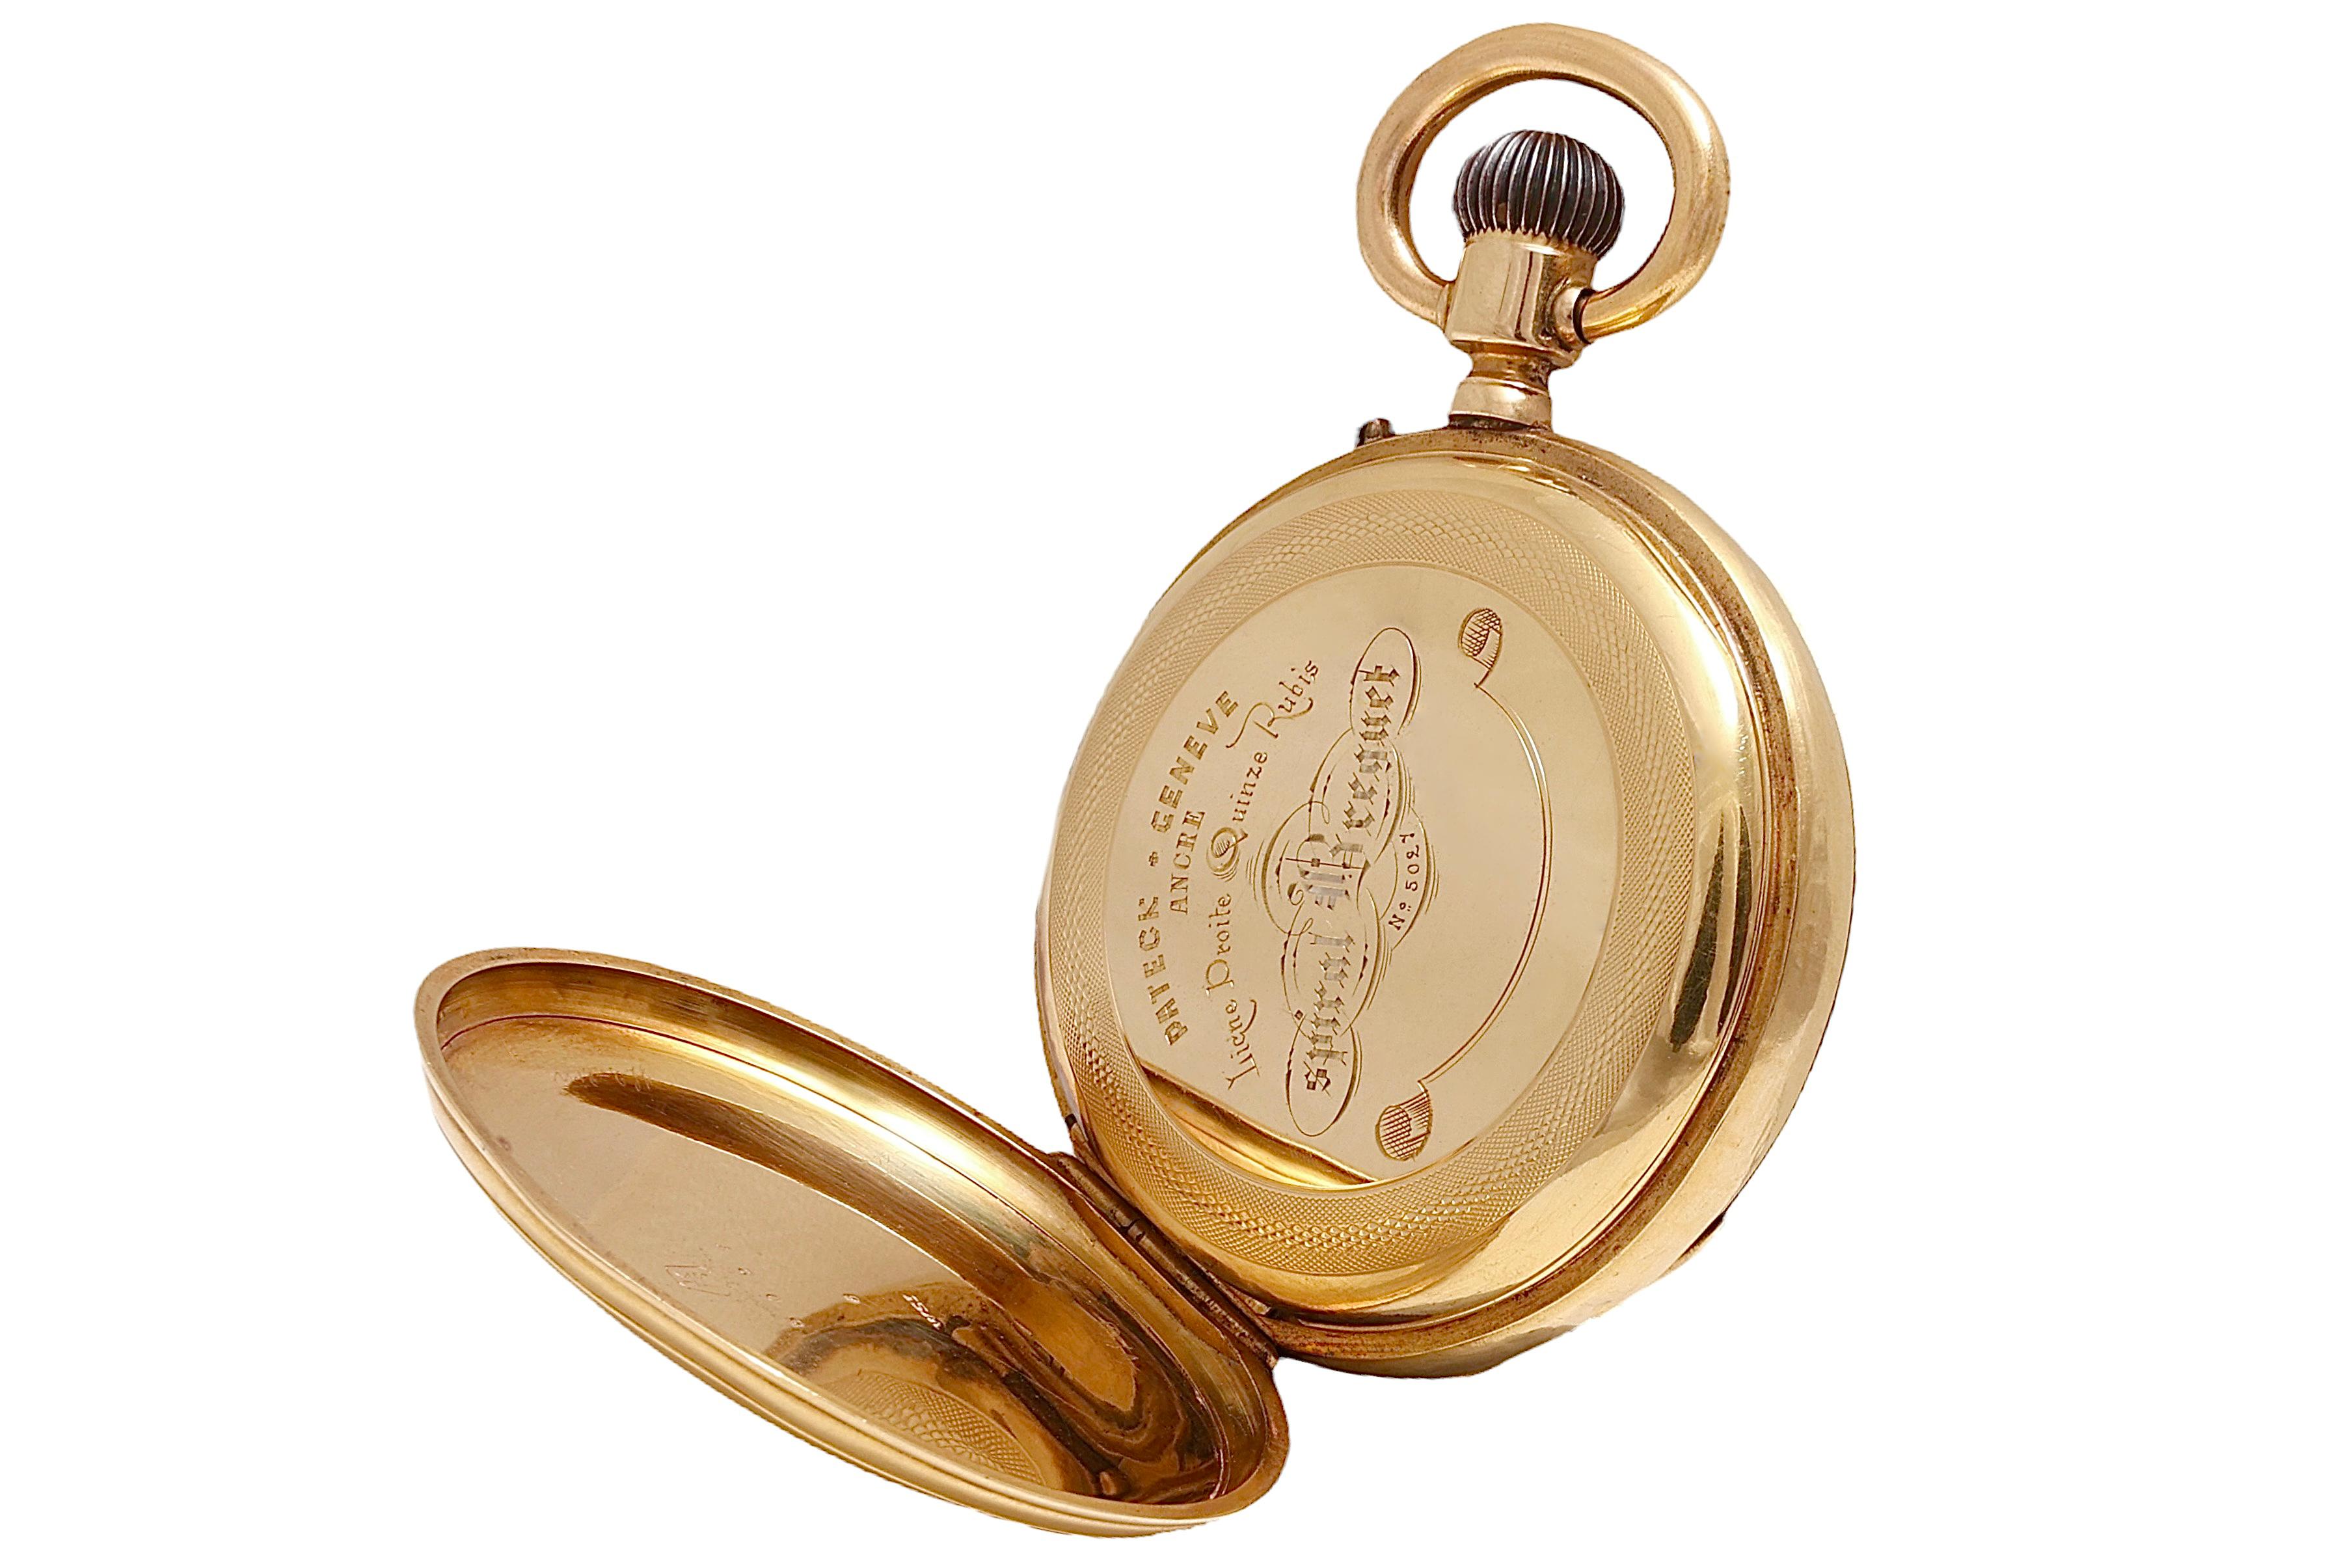 18 Kt Solid Gold Pateck Geneve Spiral Breguet Open Face Pocket Watch For Sale 1